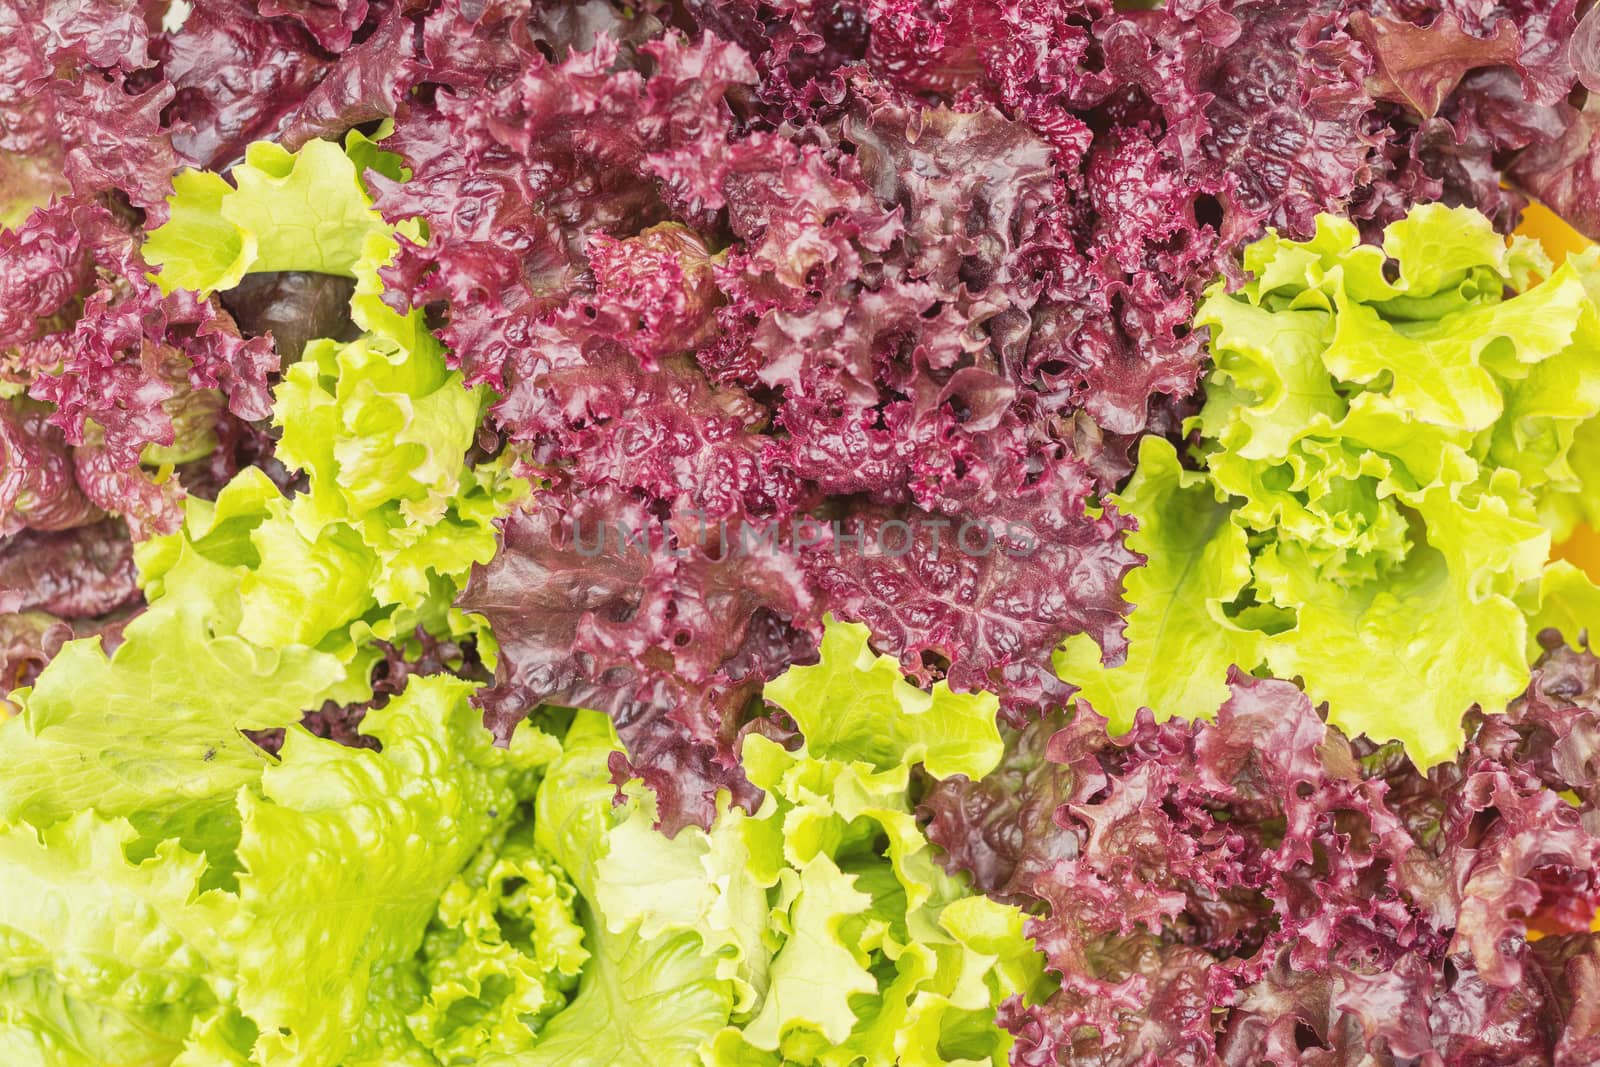  Fresh Lollo Rosso lettuce and Green lettuce by ArtSvitlyna